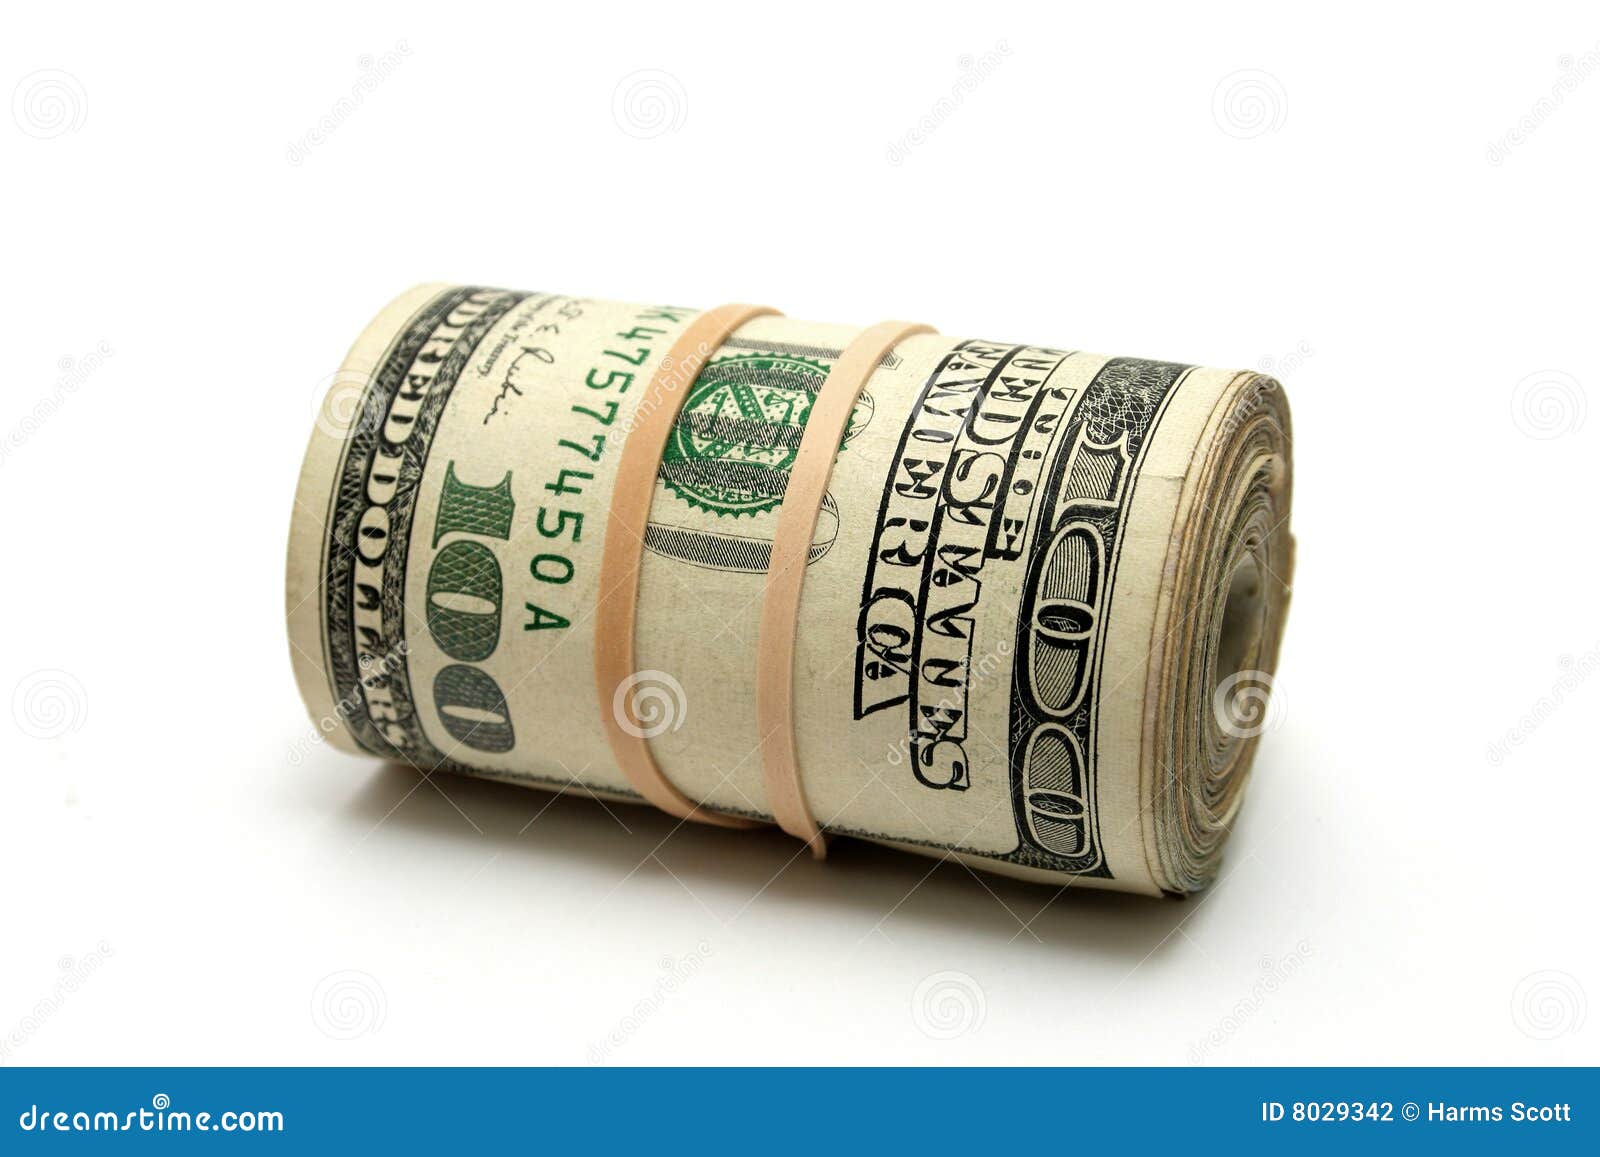 money roll clip art - photo #4